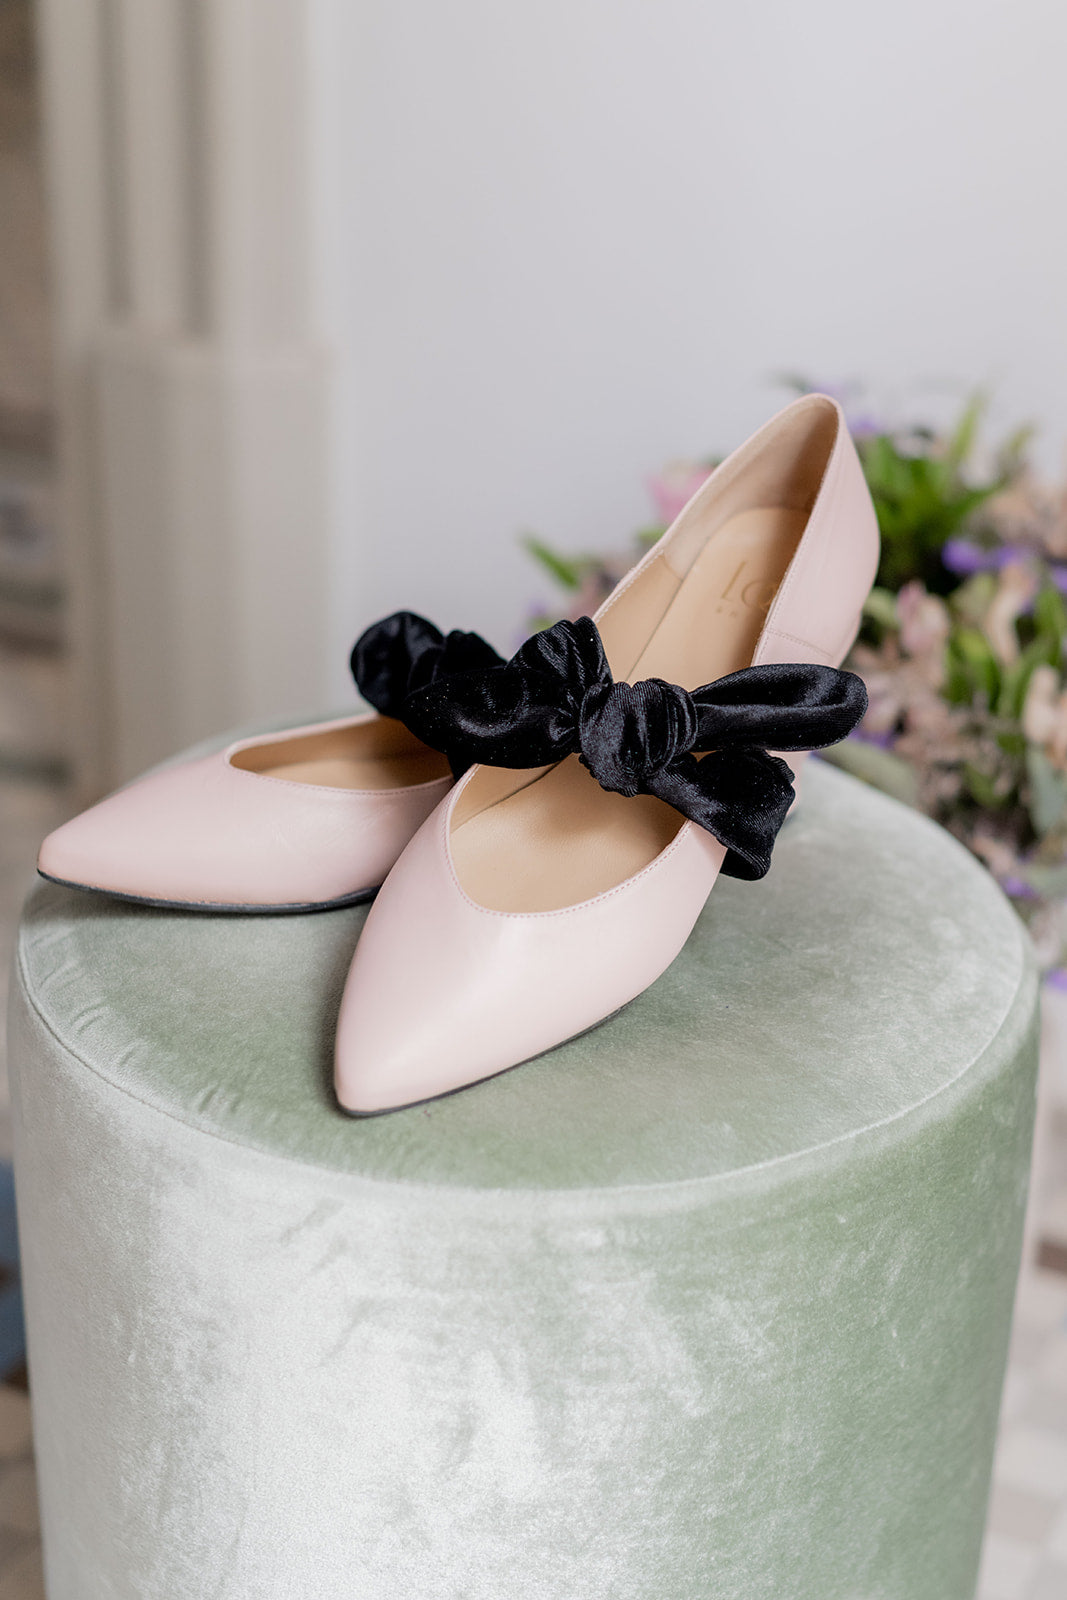 Matilda Rosa-bailarinas-ante, bailarinas, matilda, rosa, tacón de 2, zapato plano, zapatos de color rosa-Loovshoes